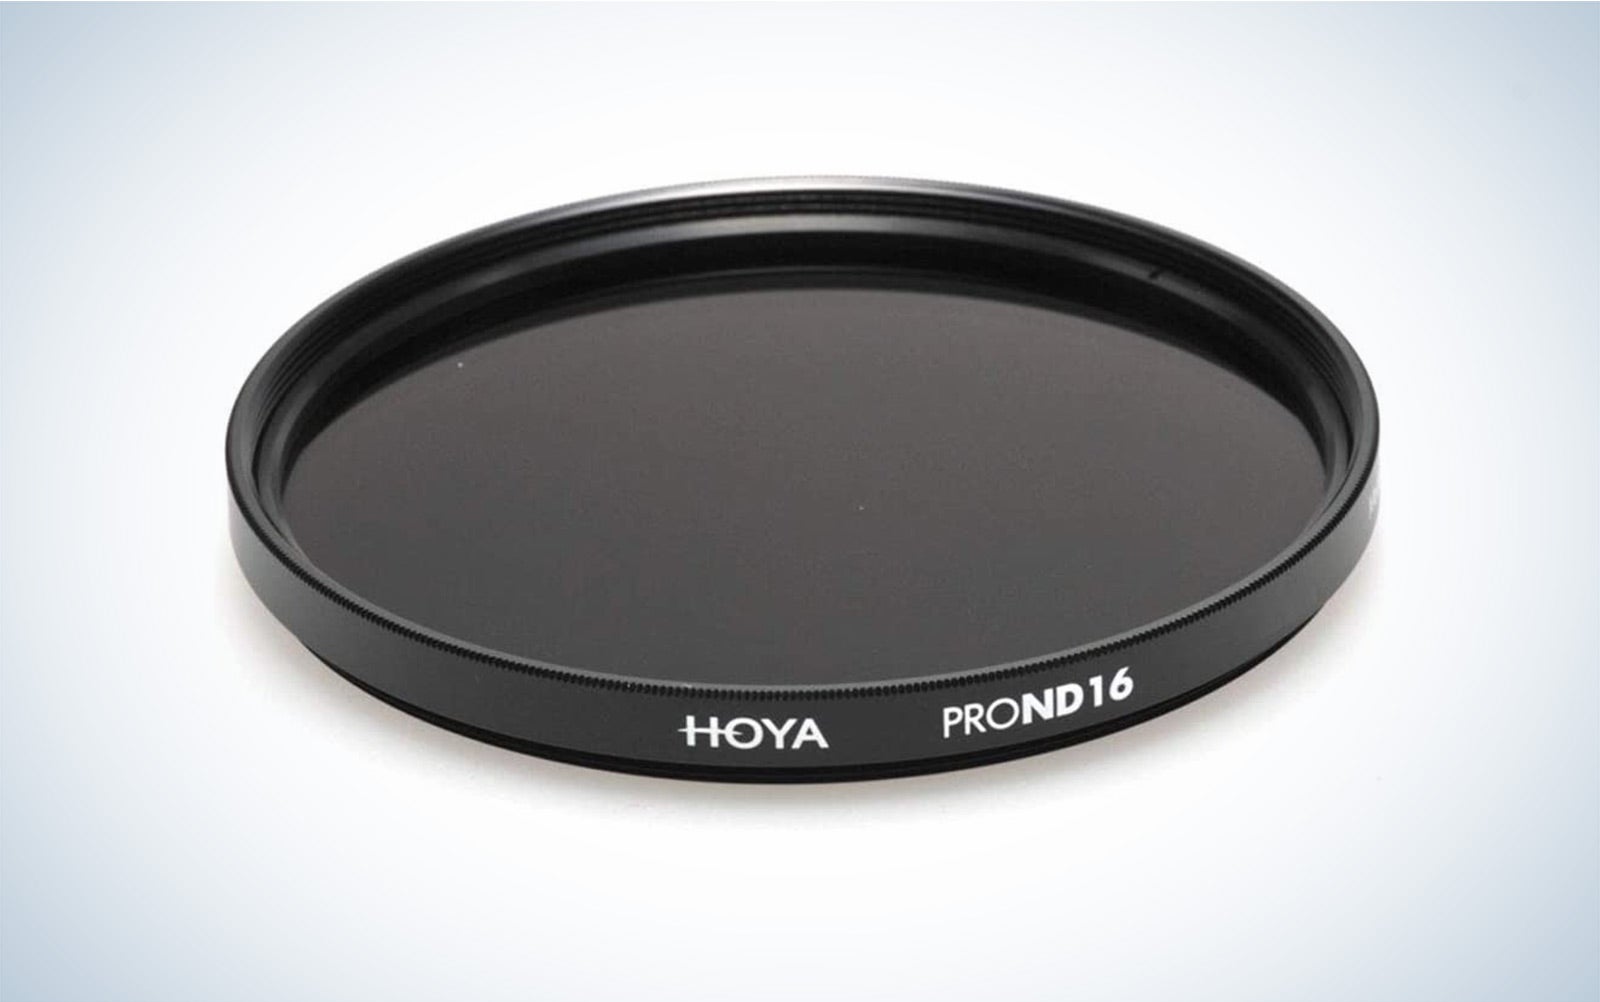 Hoya 77mm PROND 16 Neutral Density 4 Stop